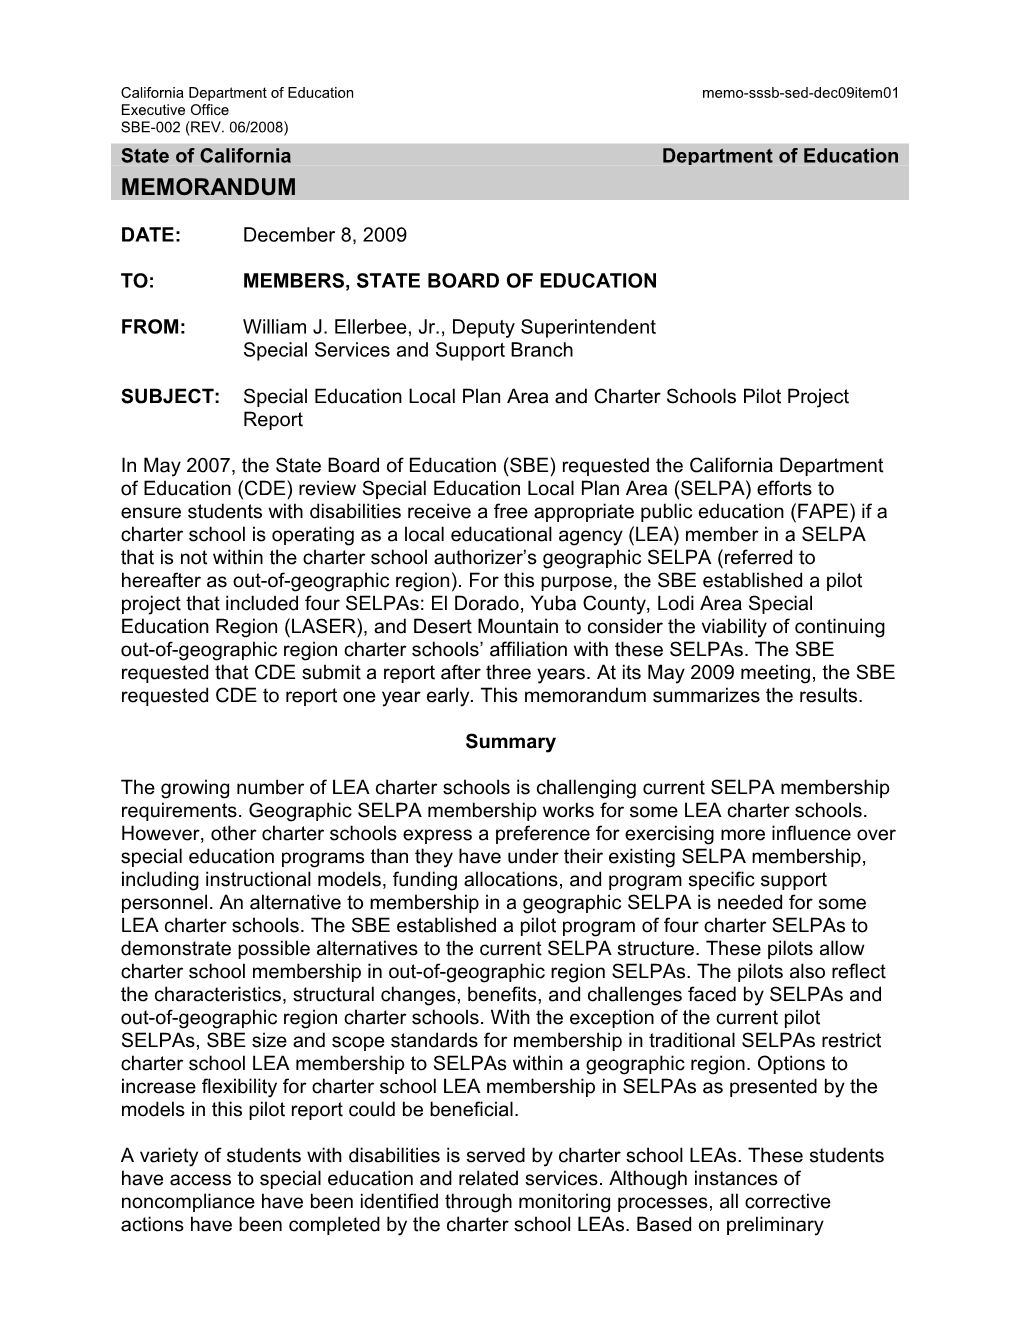 December 2009 SSSB Item 04 - Information Memorandum (CA State Board of Education)